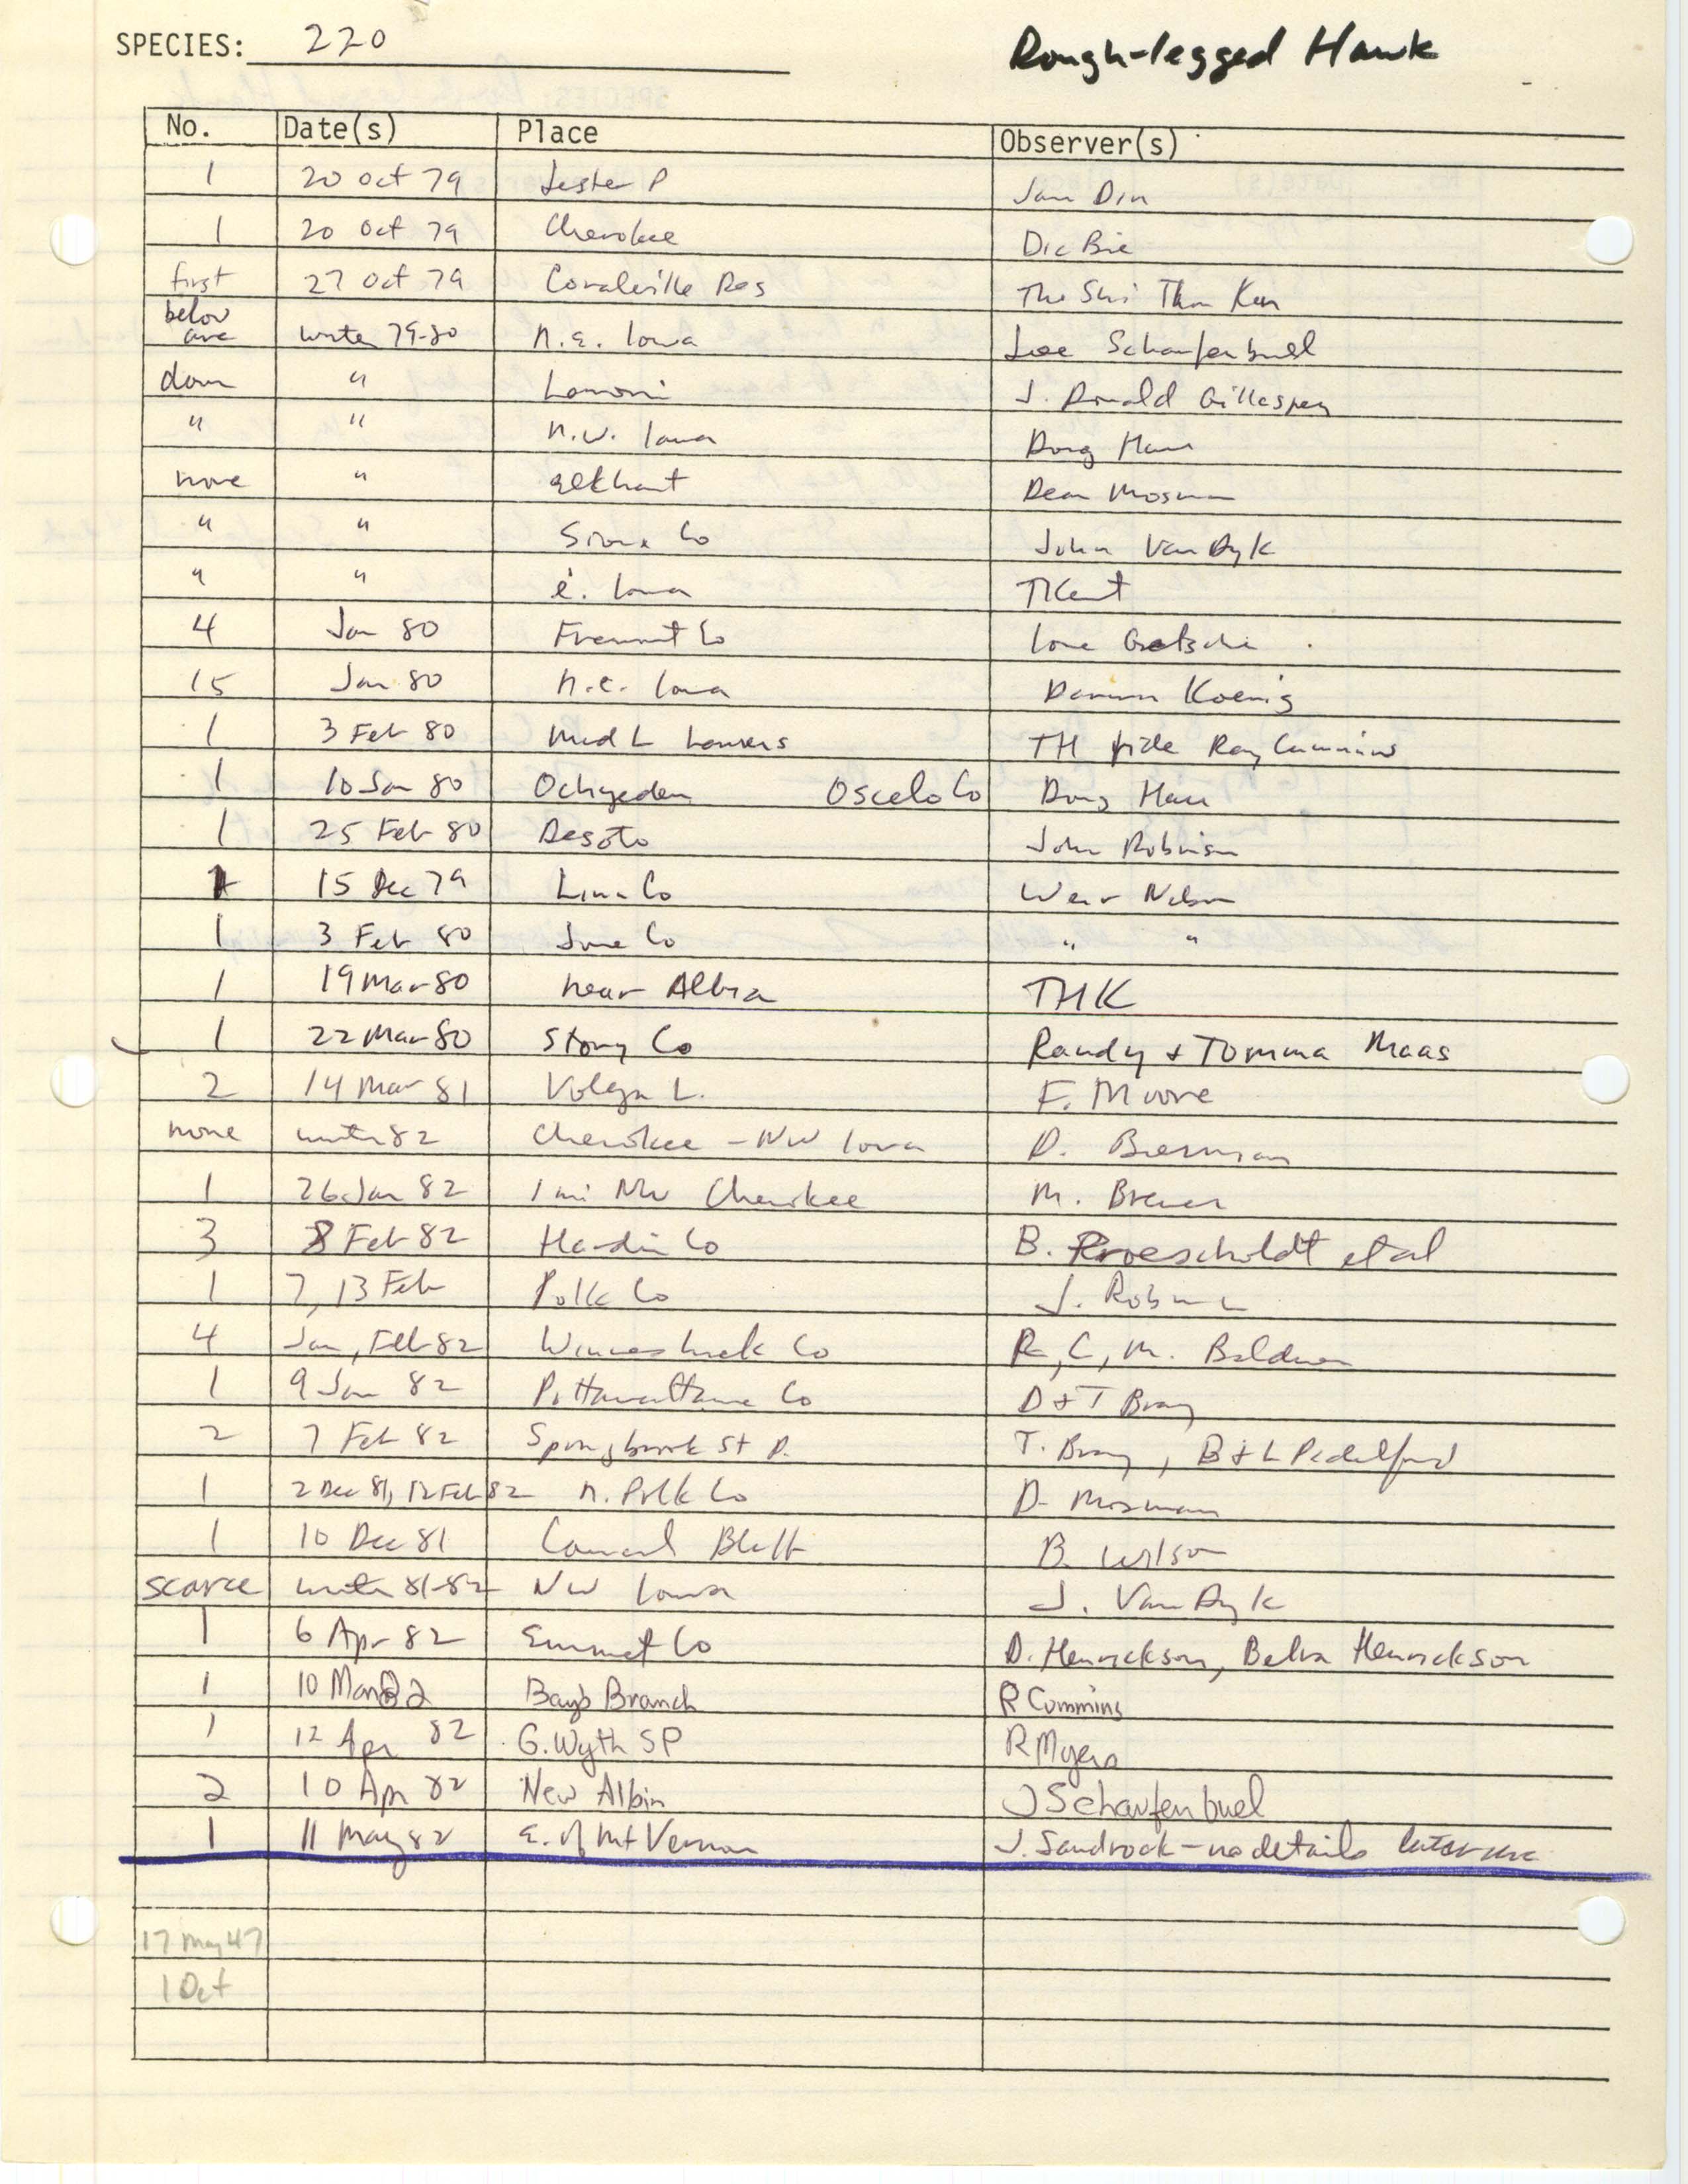 Iowa Ornithologists' Union, field report compiled data, Rough-legged Hawk, 1947-1983